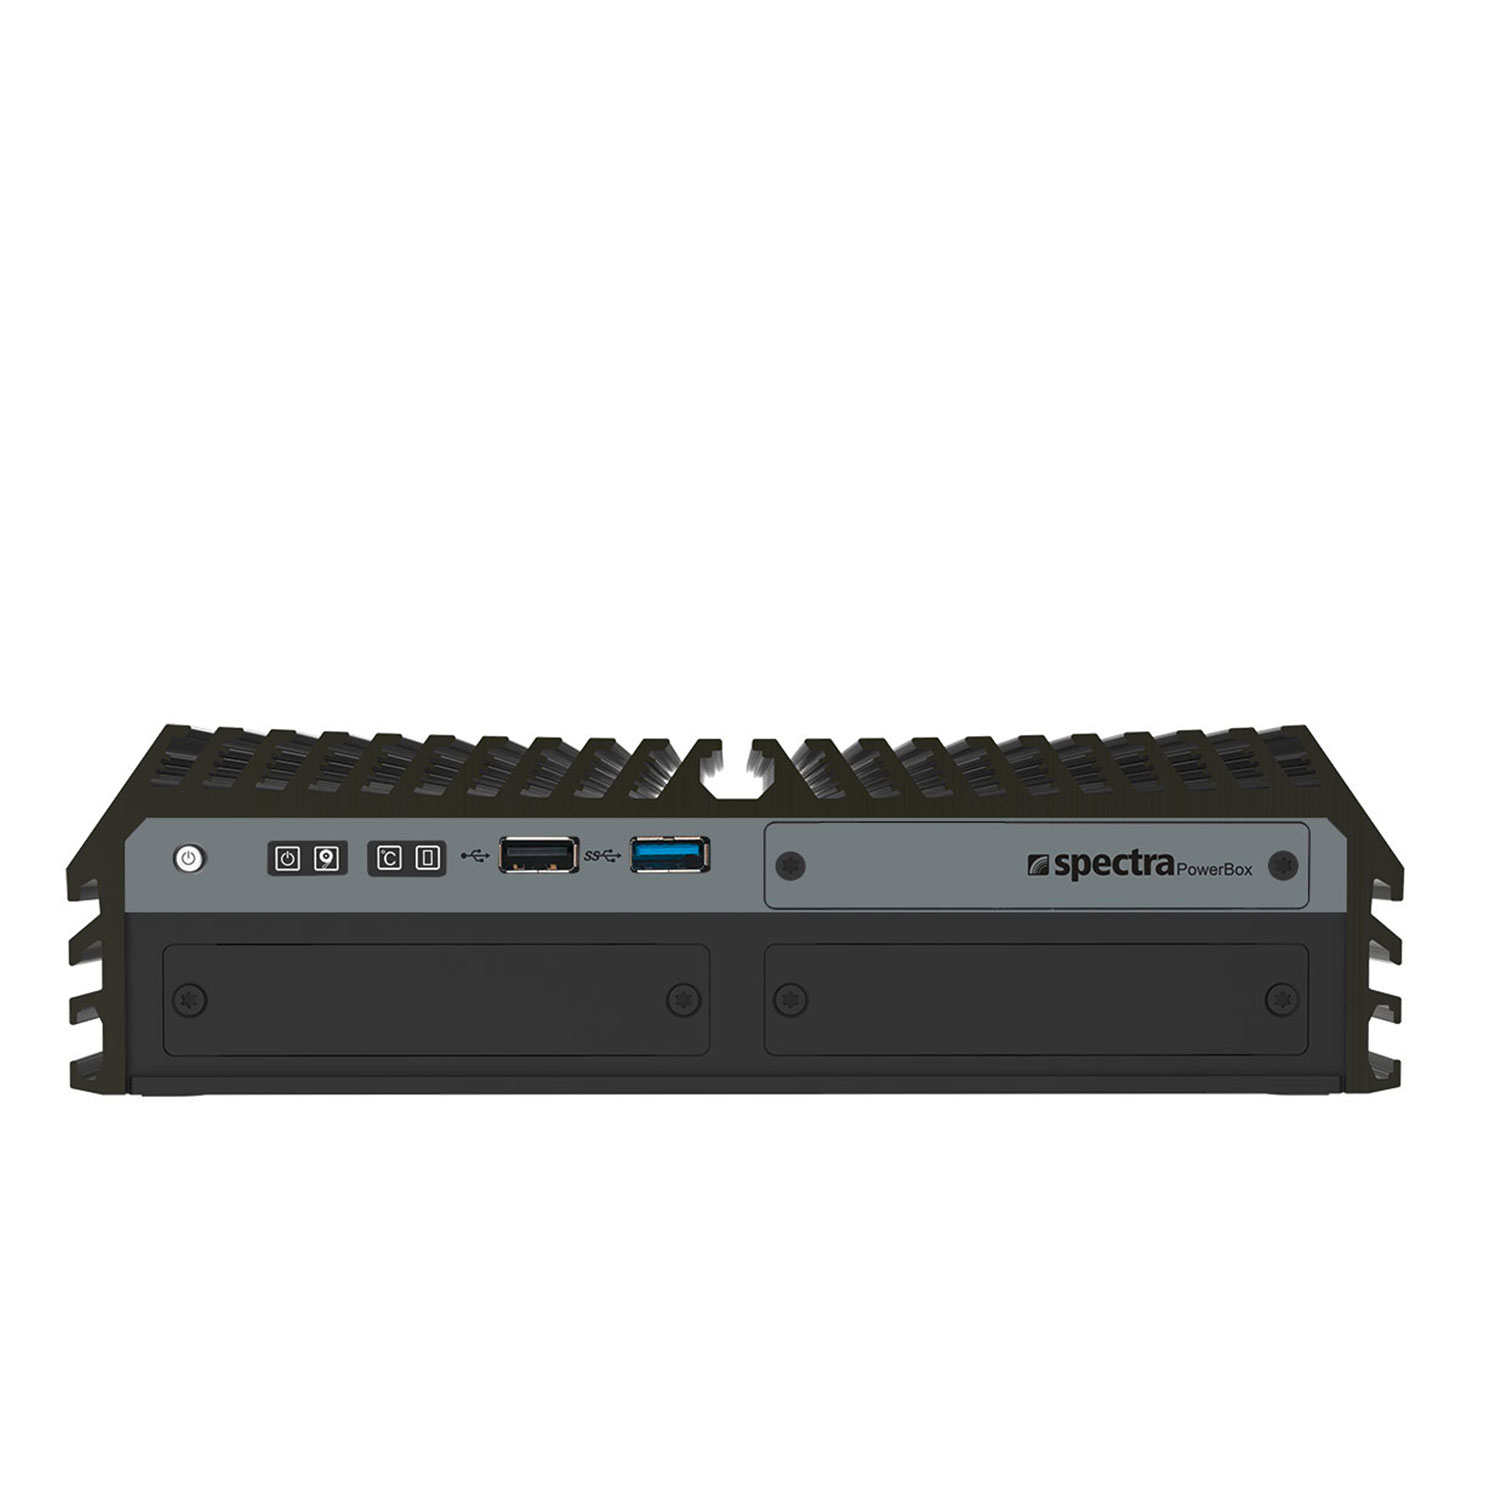 Spectra-PowerBox-600-Mini-PC